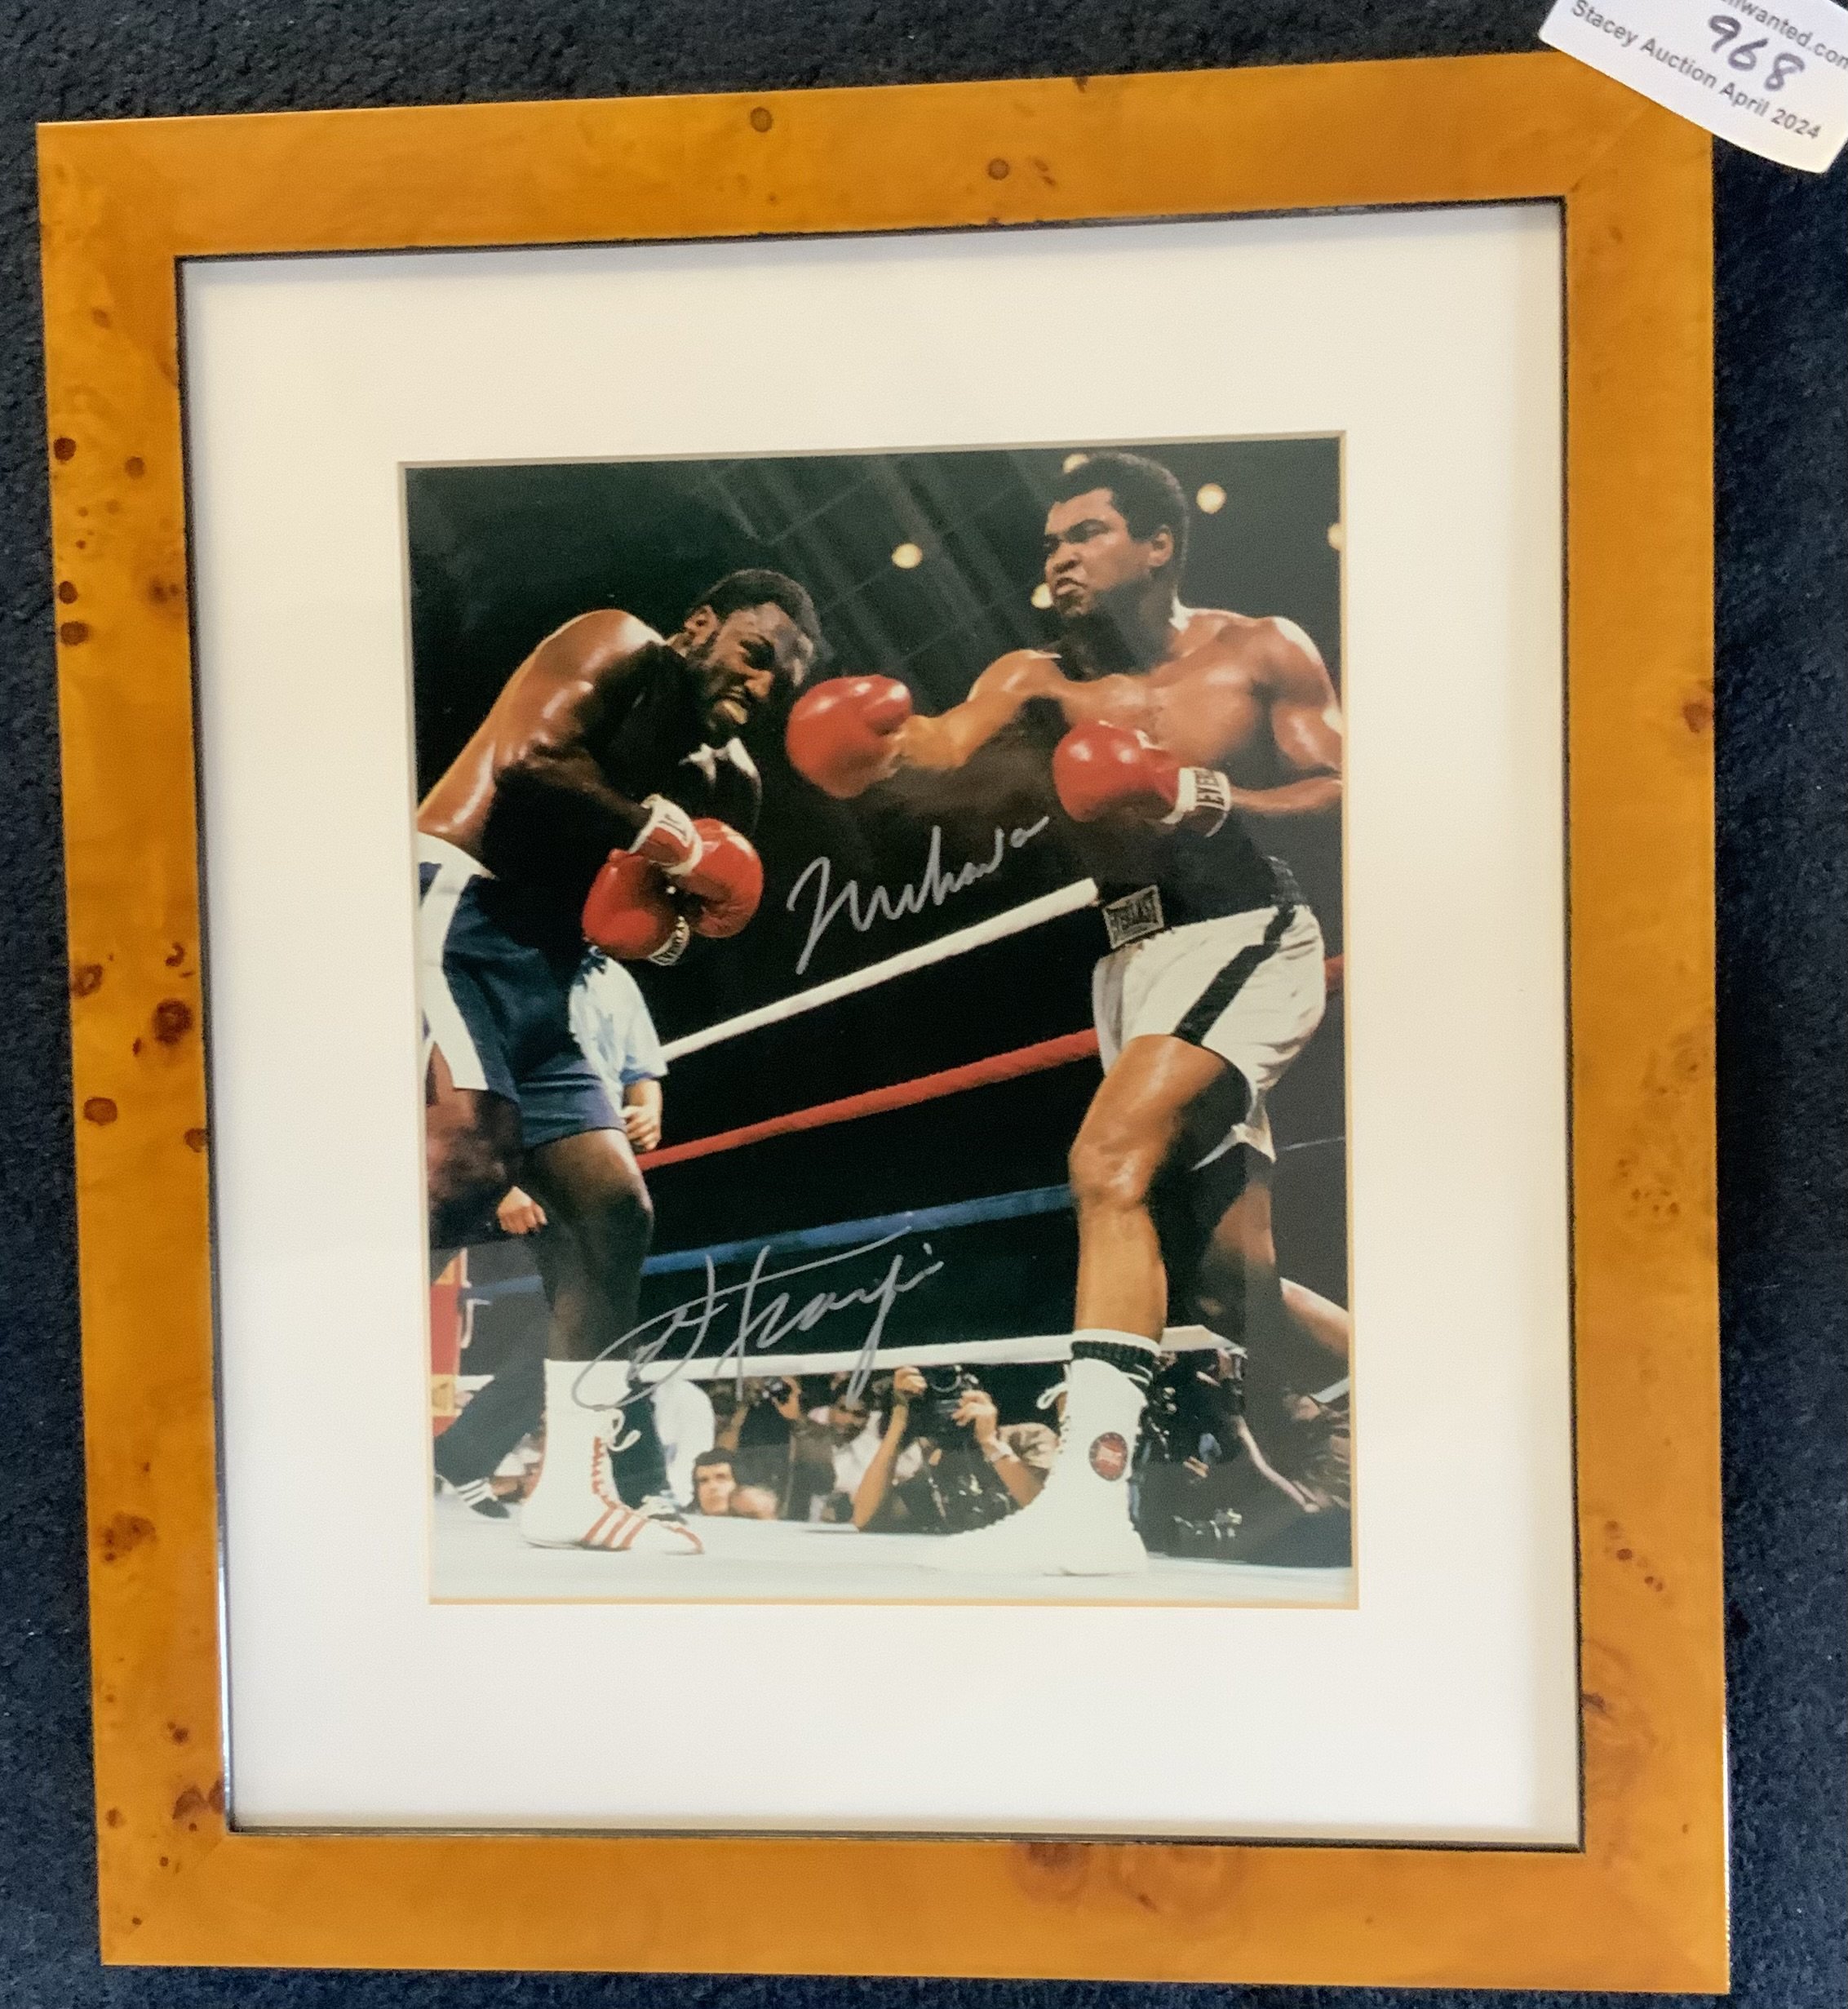 Ali + Frazier Signed Framed Boxing Photo: Thriller